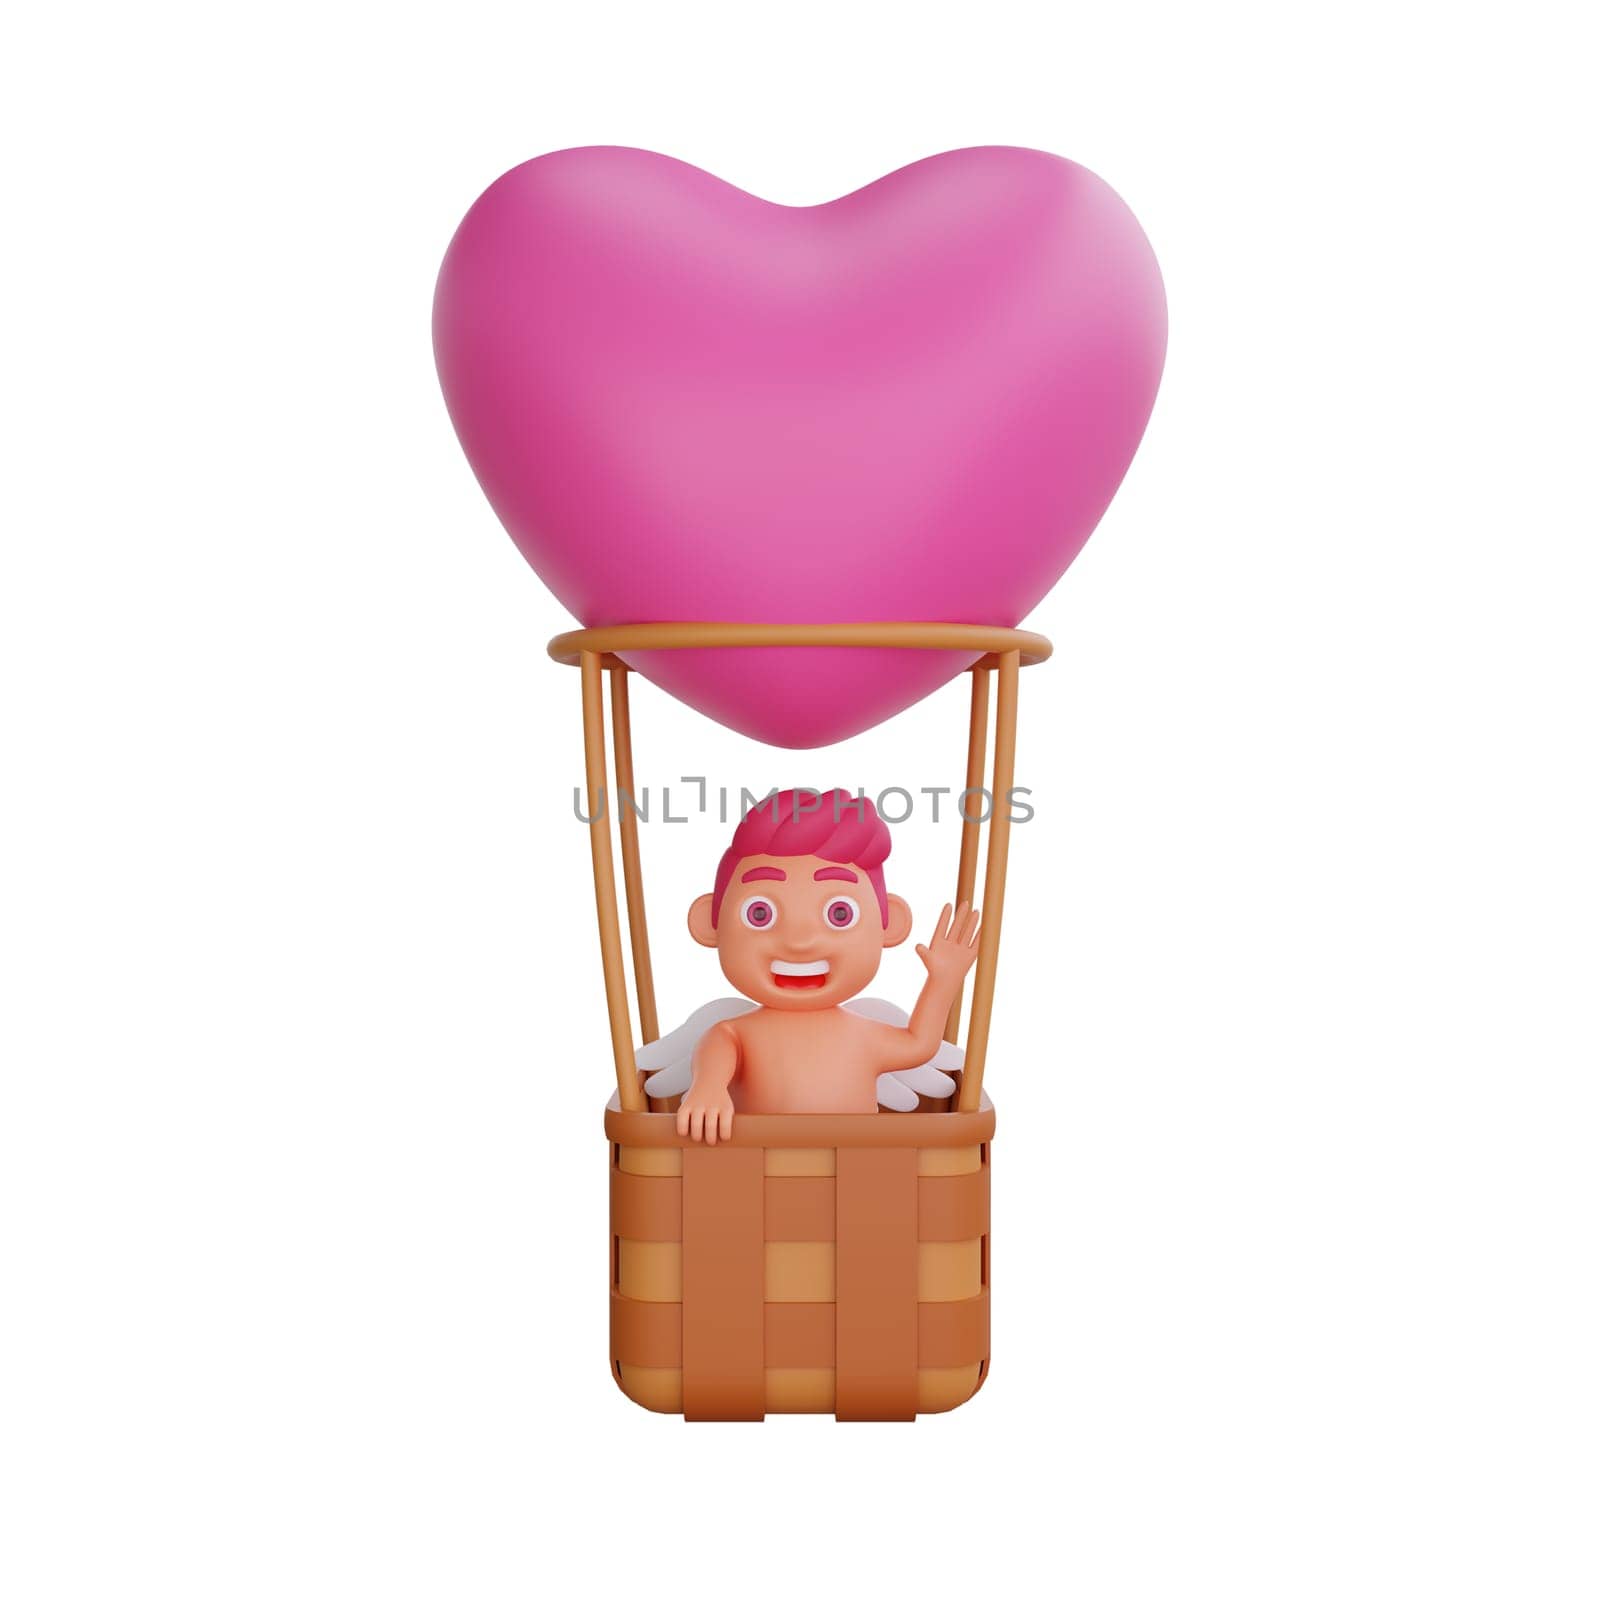 3D illustration of Valentine Cupid character waving from a heart-shaped hot air balloon by Rahmat_Djayusman